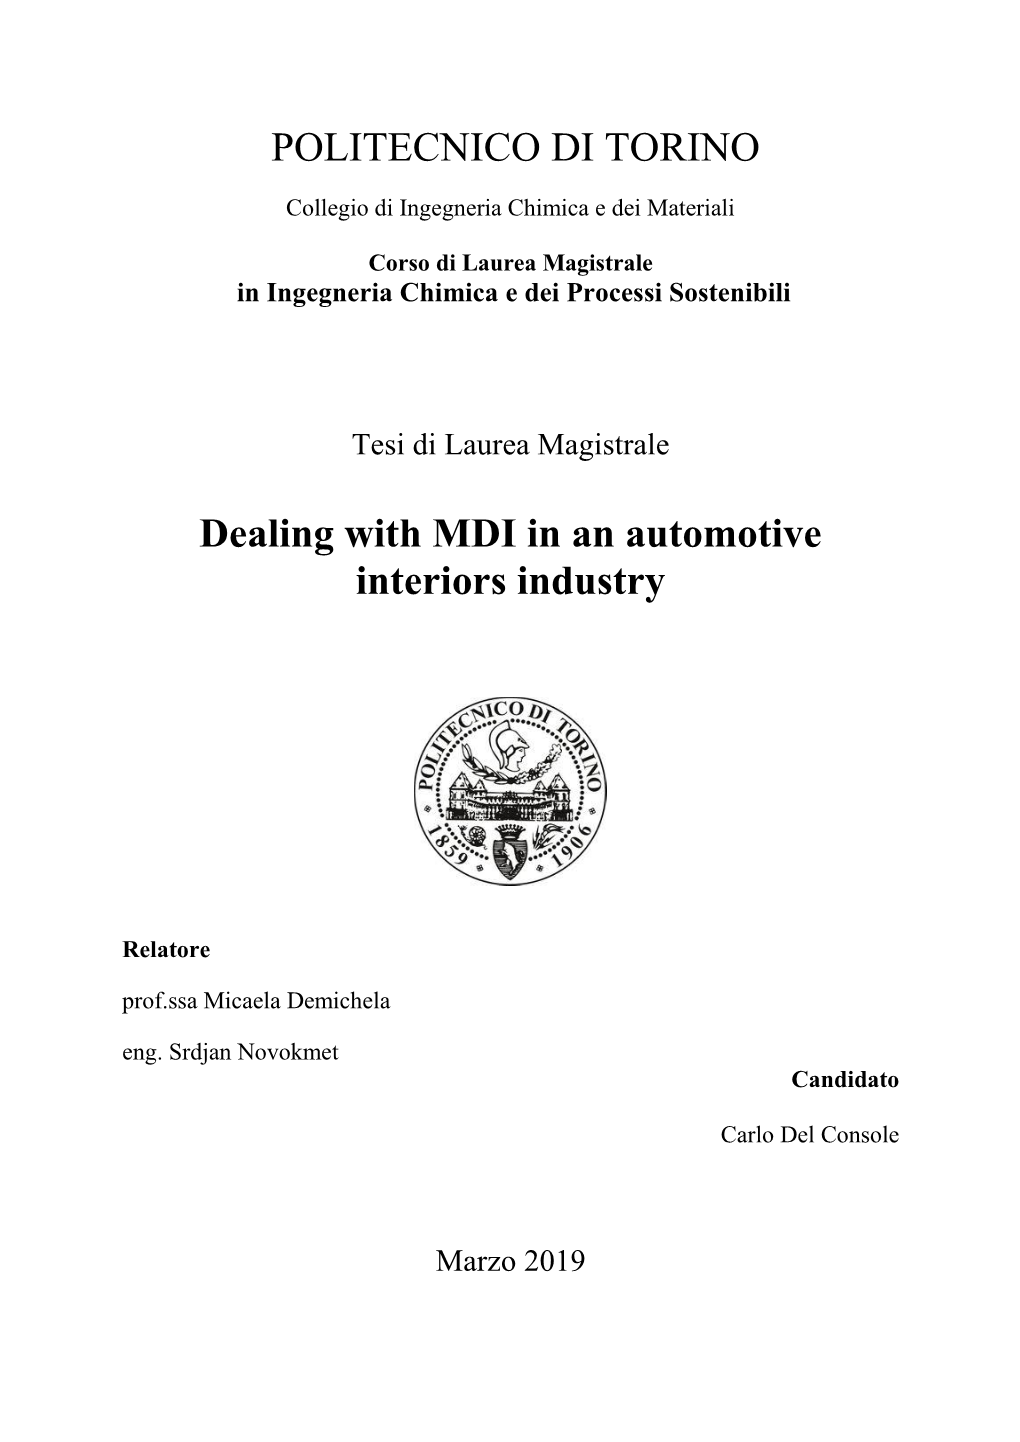 POLITECNICO DI TORINO Dealing with MDI in an Automotive Interiors